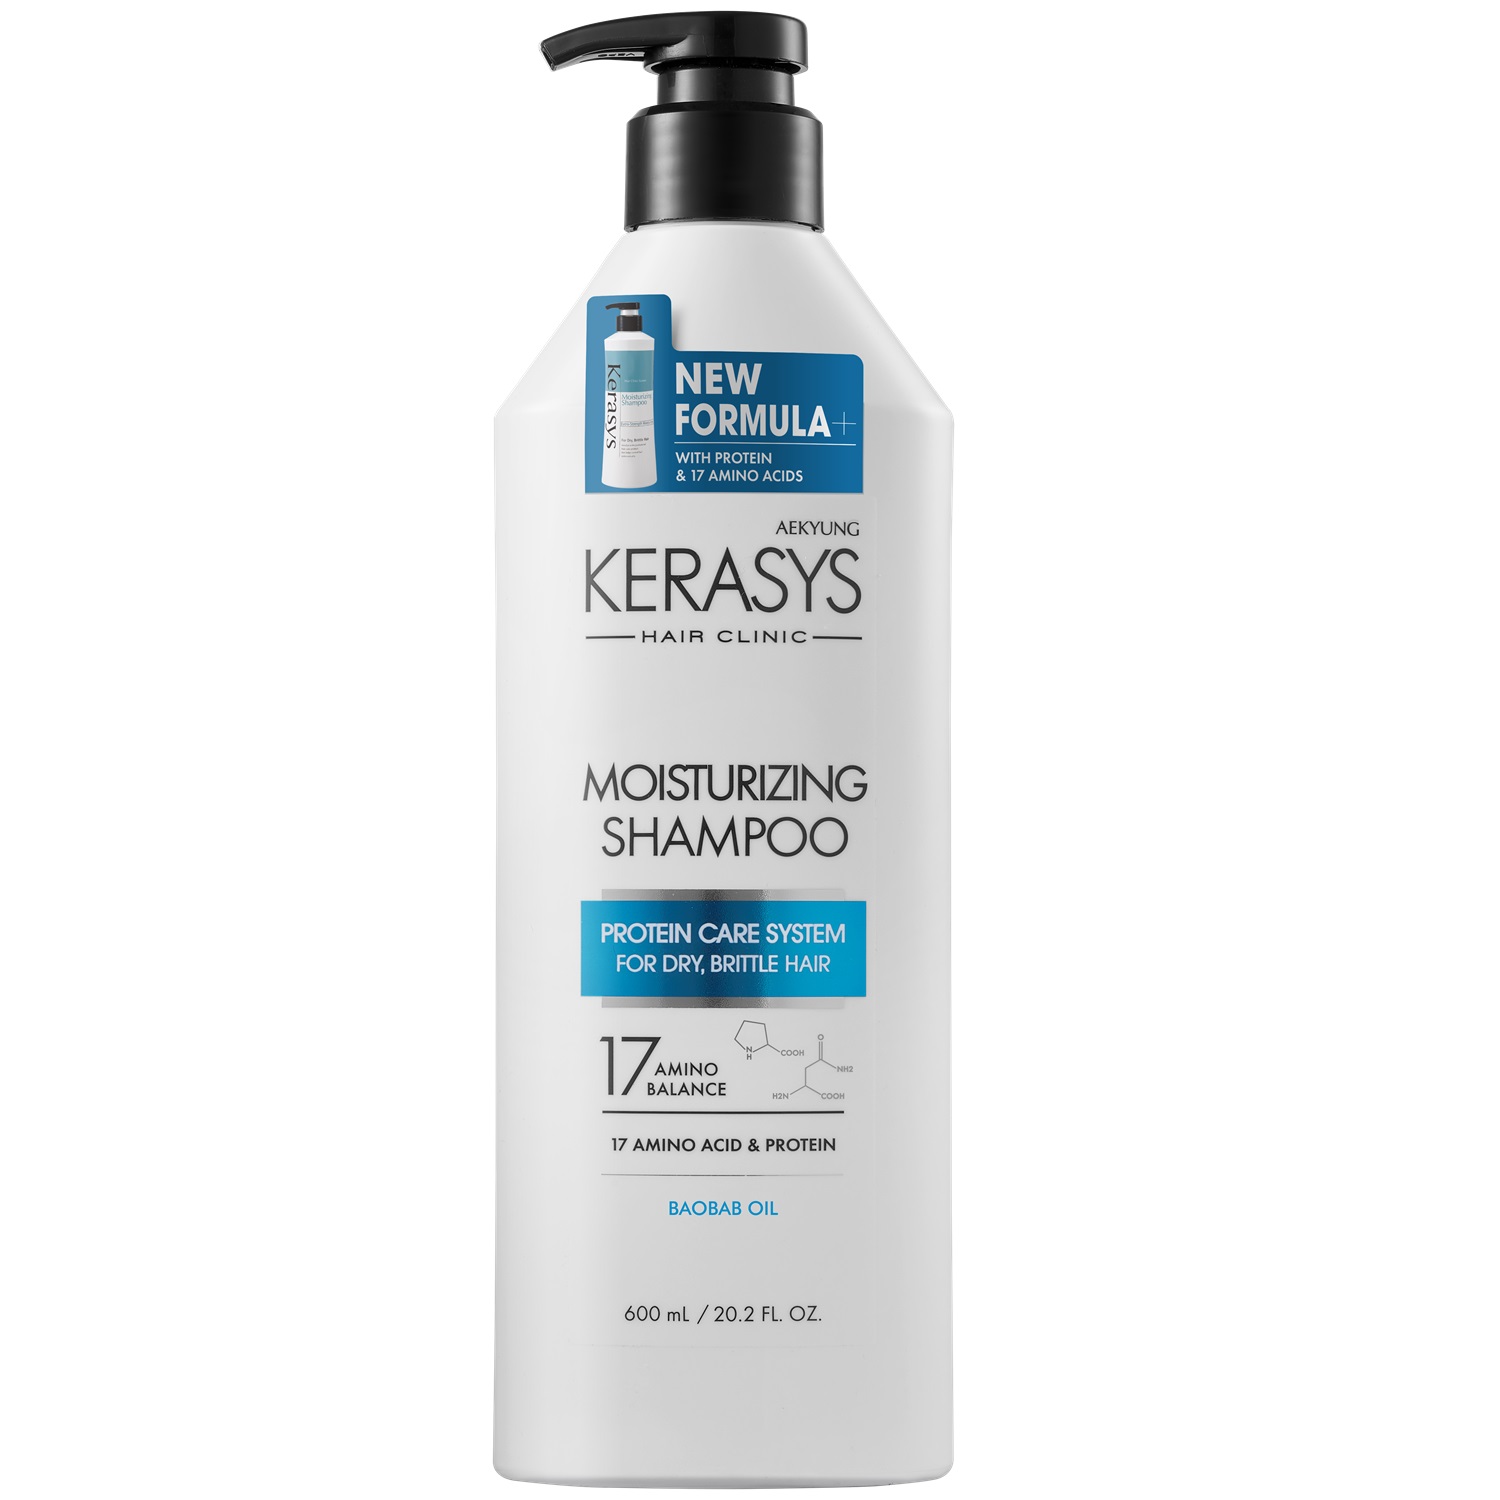 Kerasys Hair Clinic Moisturizing Шампунь увлажняющий для волос 600 мл (Kerasys, ) kerasys hair clinic moisturizing шампунь увлажняющий для волос 600 мл kerasys